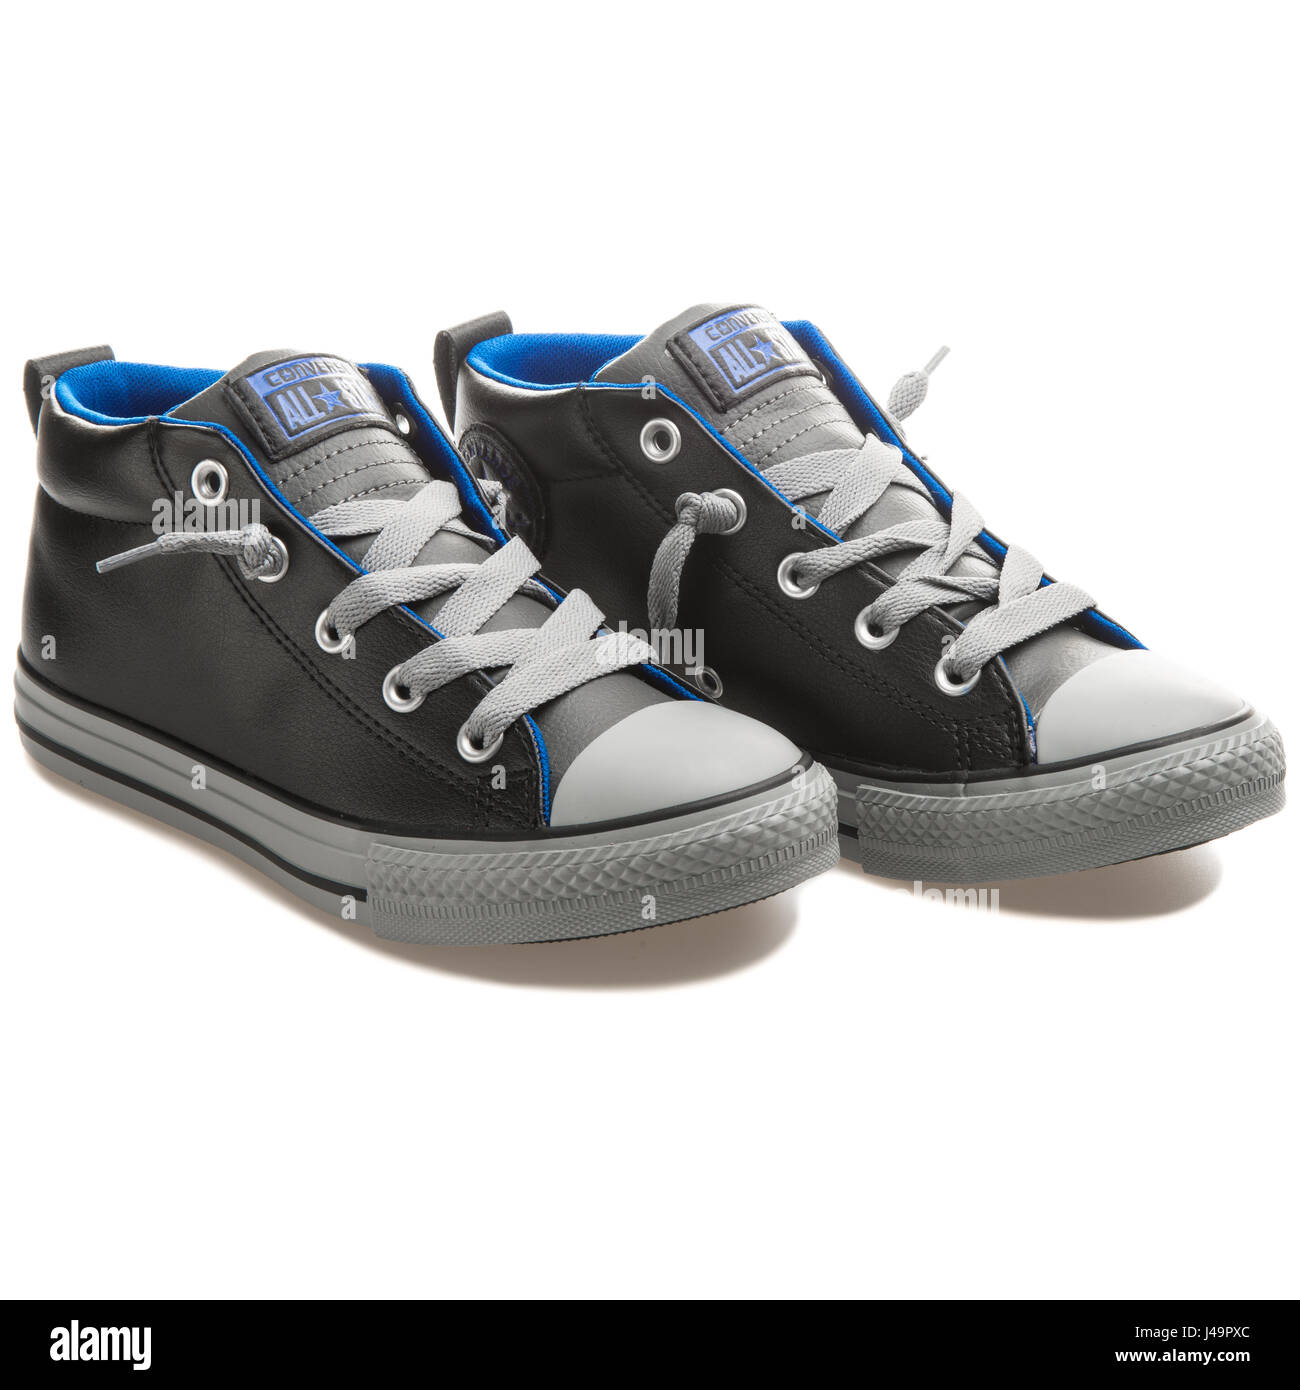 Converse Chuck Taylor All Star Street Mid Leather Black Grey Blue - 649996C  Stock Photo - Alamy